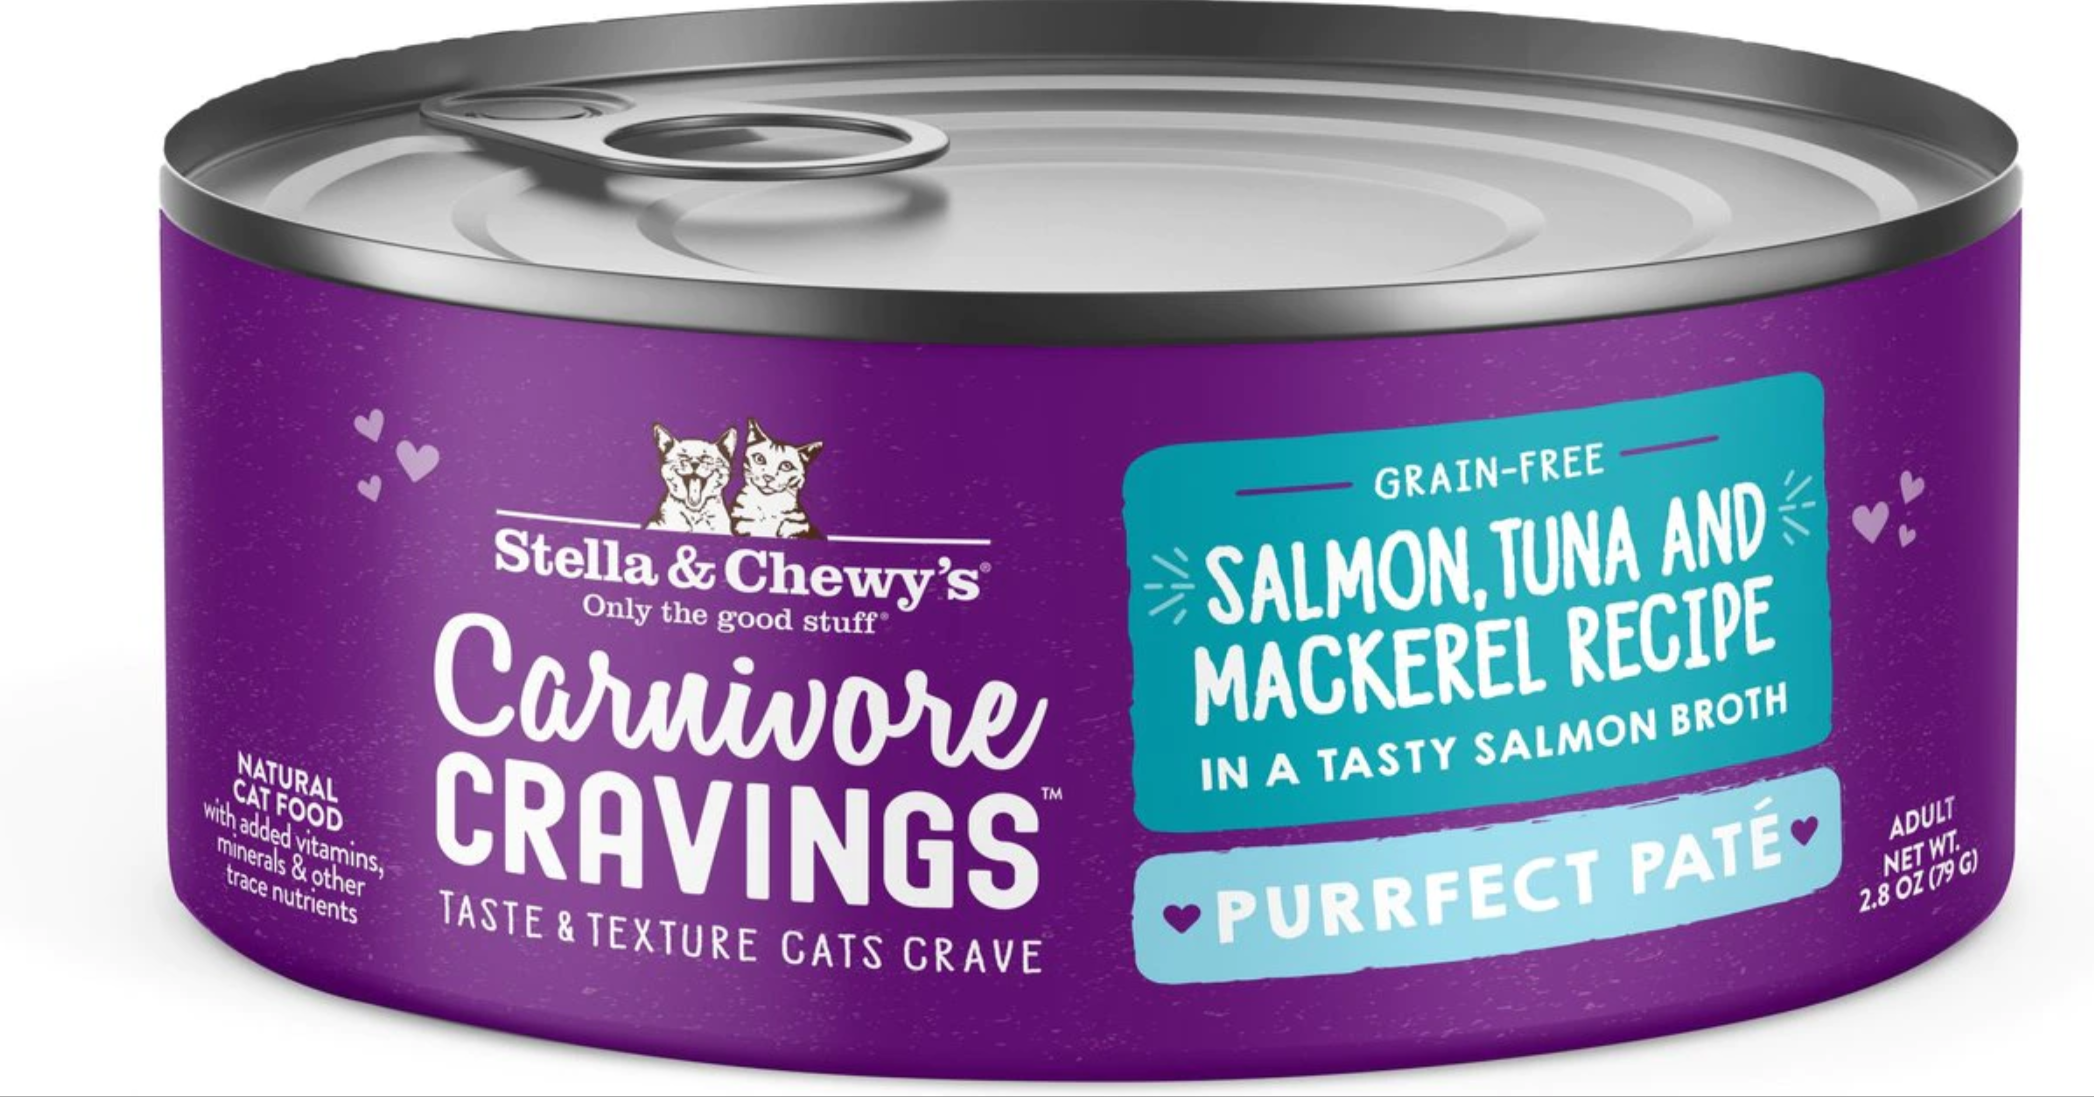 Stella & Chewy's Carnivore Cravings Purrfect Pate Salmon, Tuna & Mackerel Recipe - 2.8oz Can